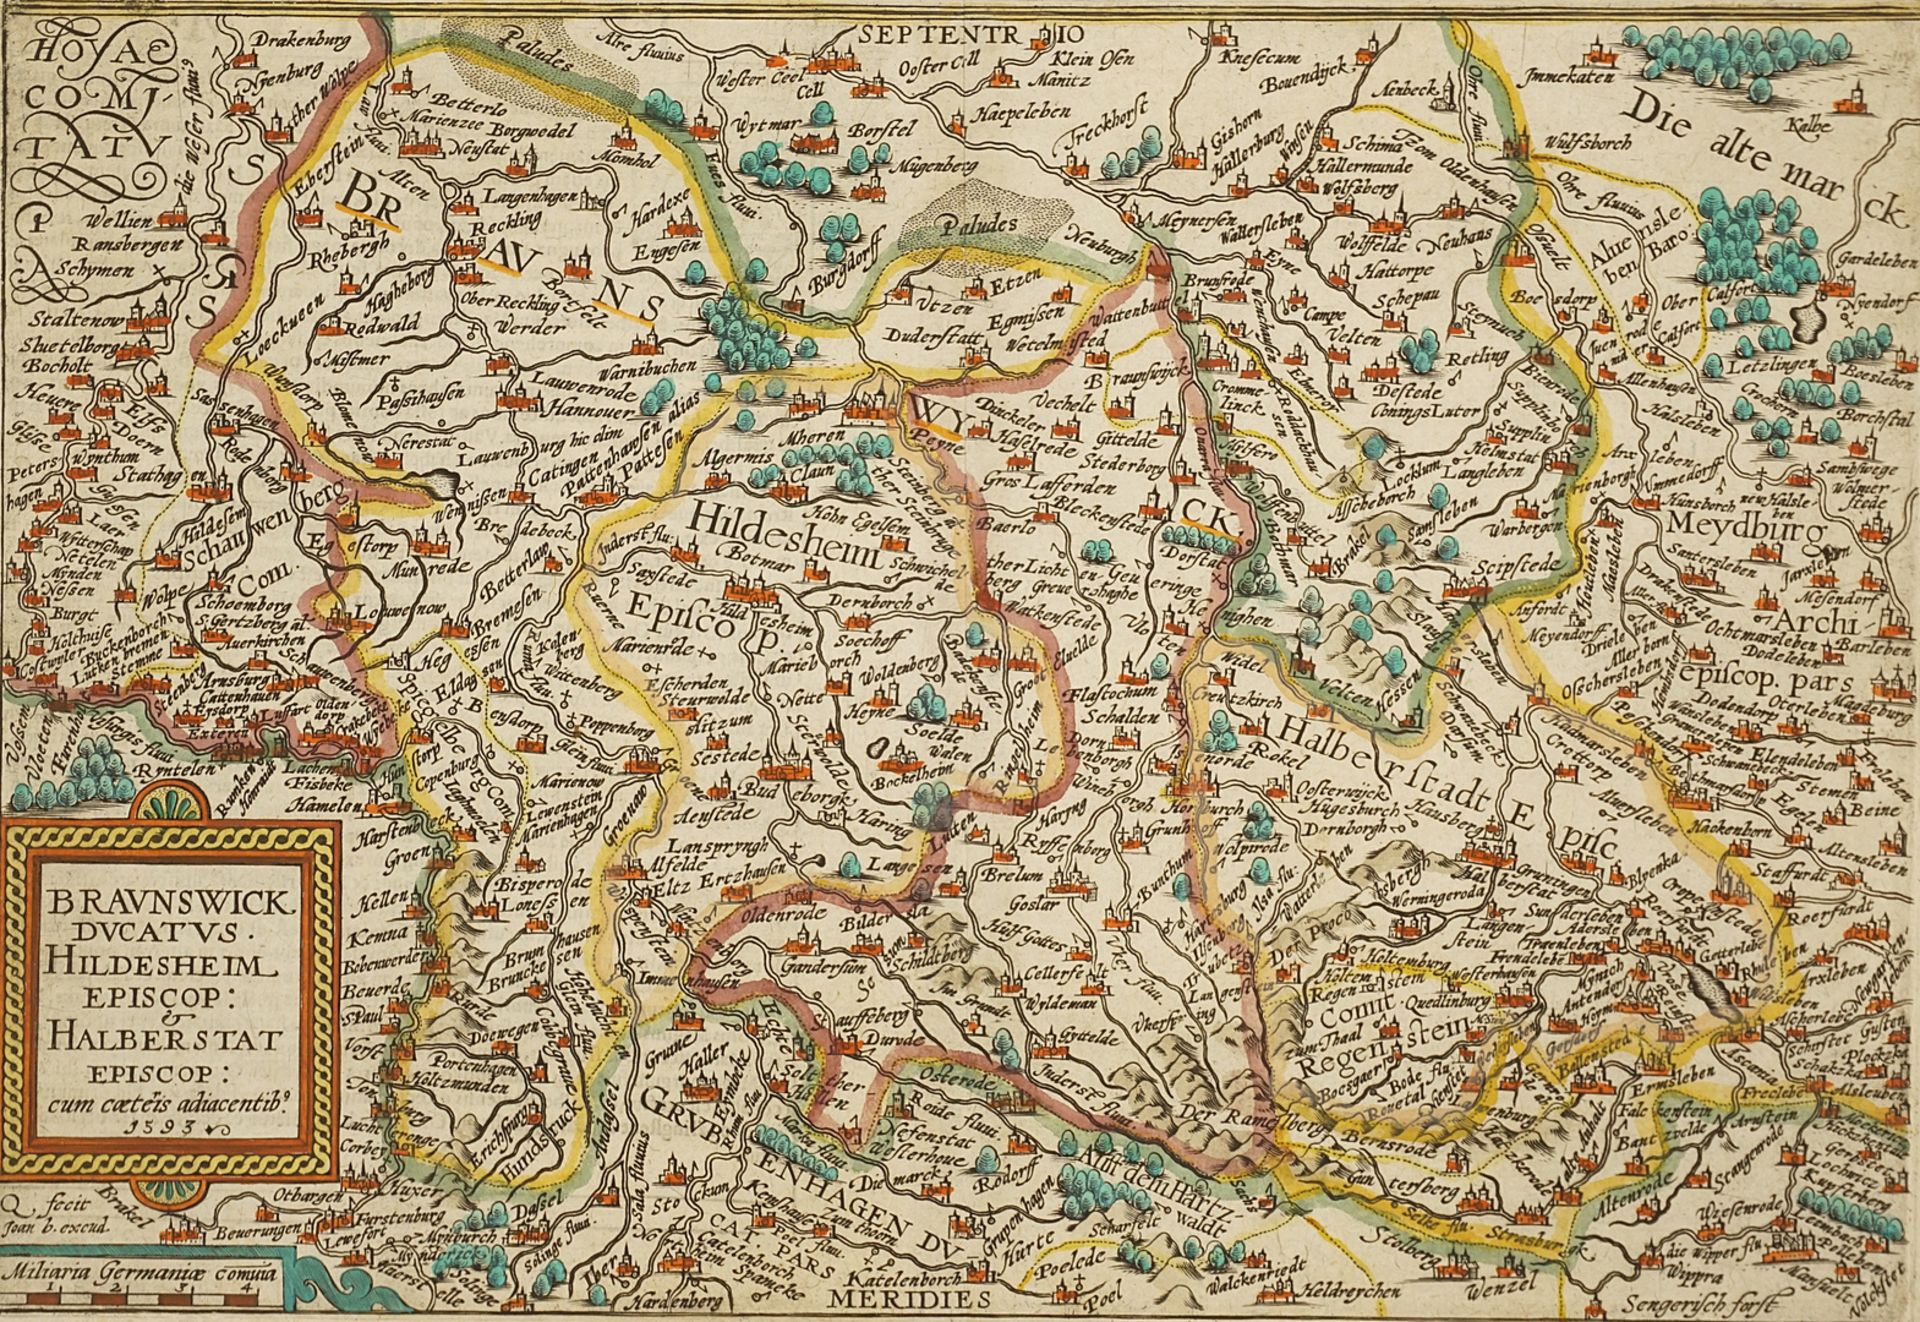 Mat(t)hias Quad (1557-1613), "Braunswick ducatus […]" (Map of Brunswick, Hildesheim and Halberstadt)